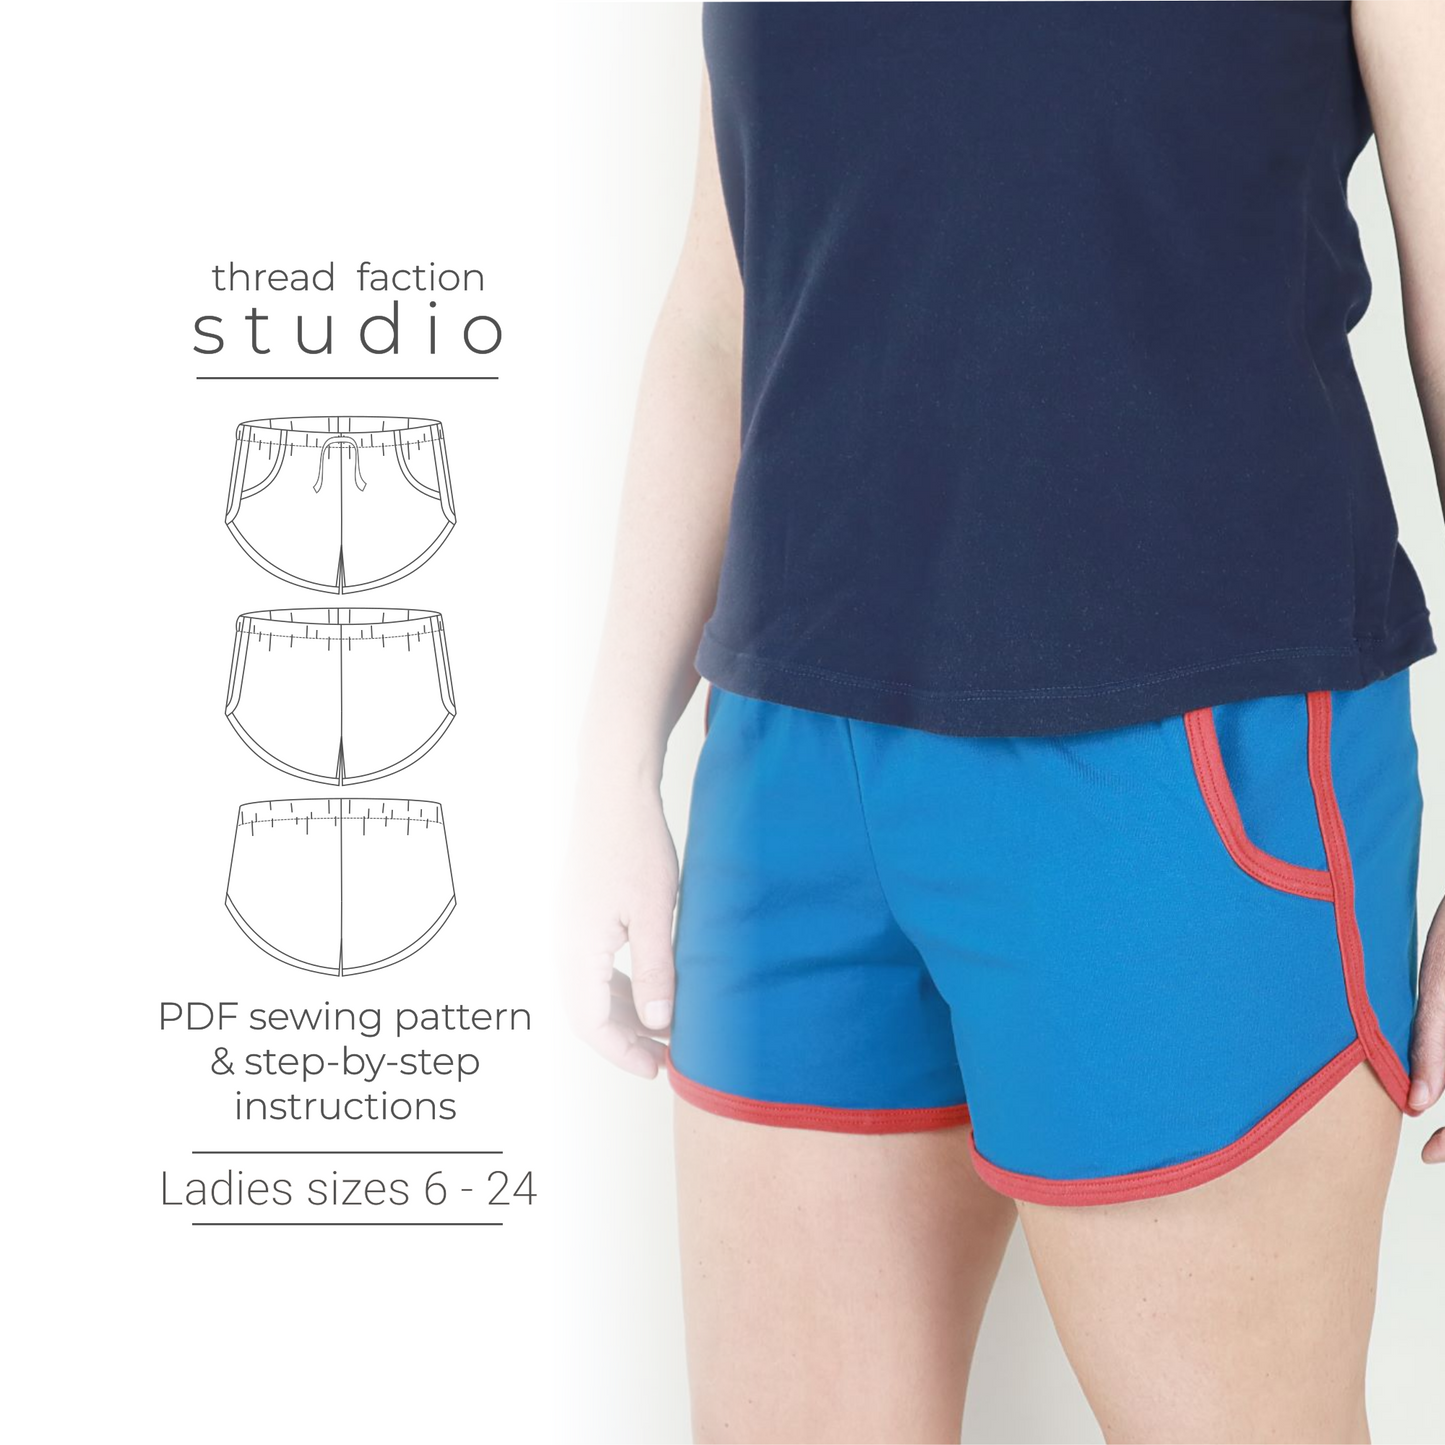 The Women's Roller Shorts – Thread Faction Studio